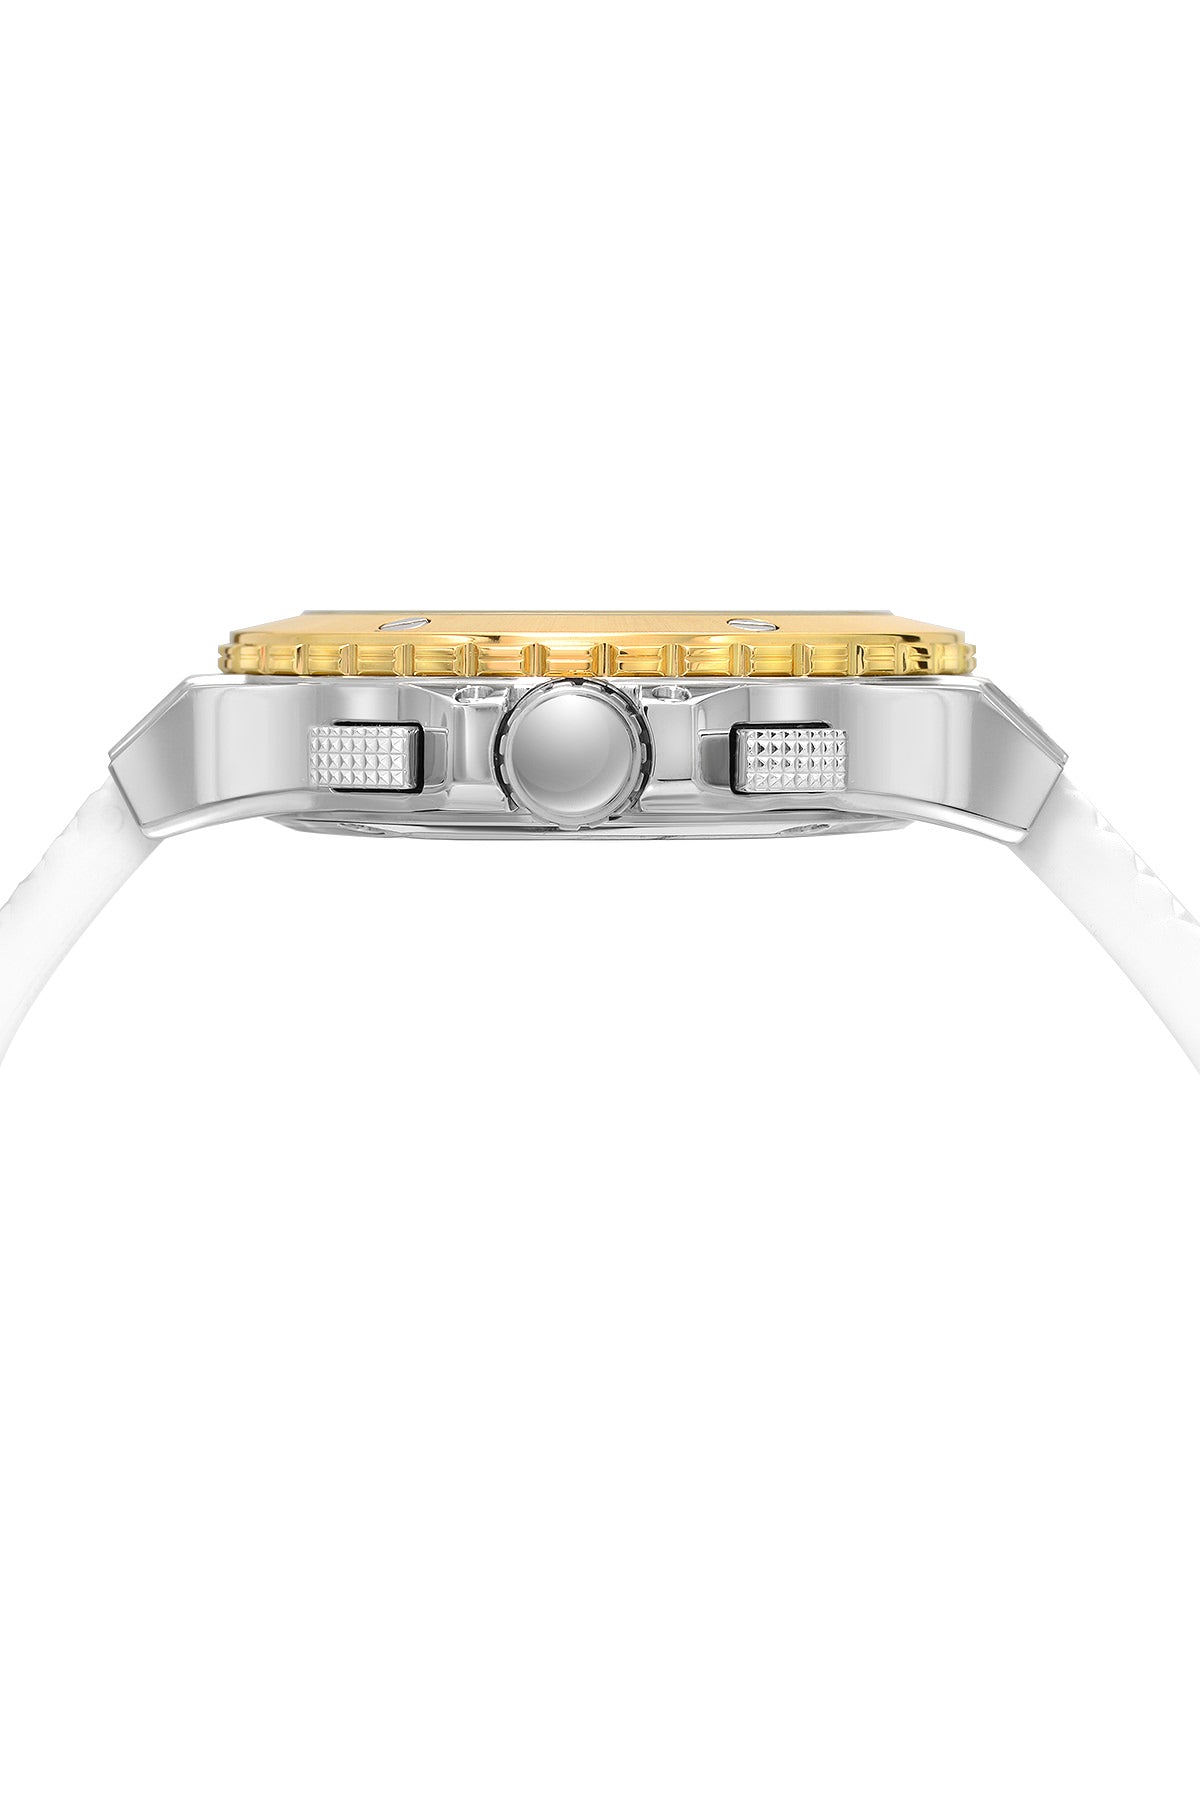 Porsamo Bleu Marcus luxury chronograph men's watch, silicone strap, gold, white 653BMAR